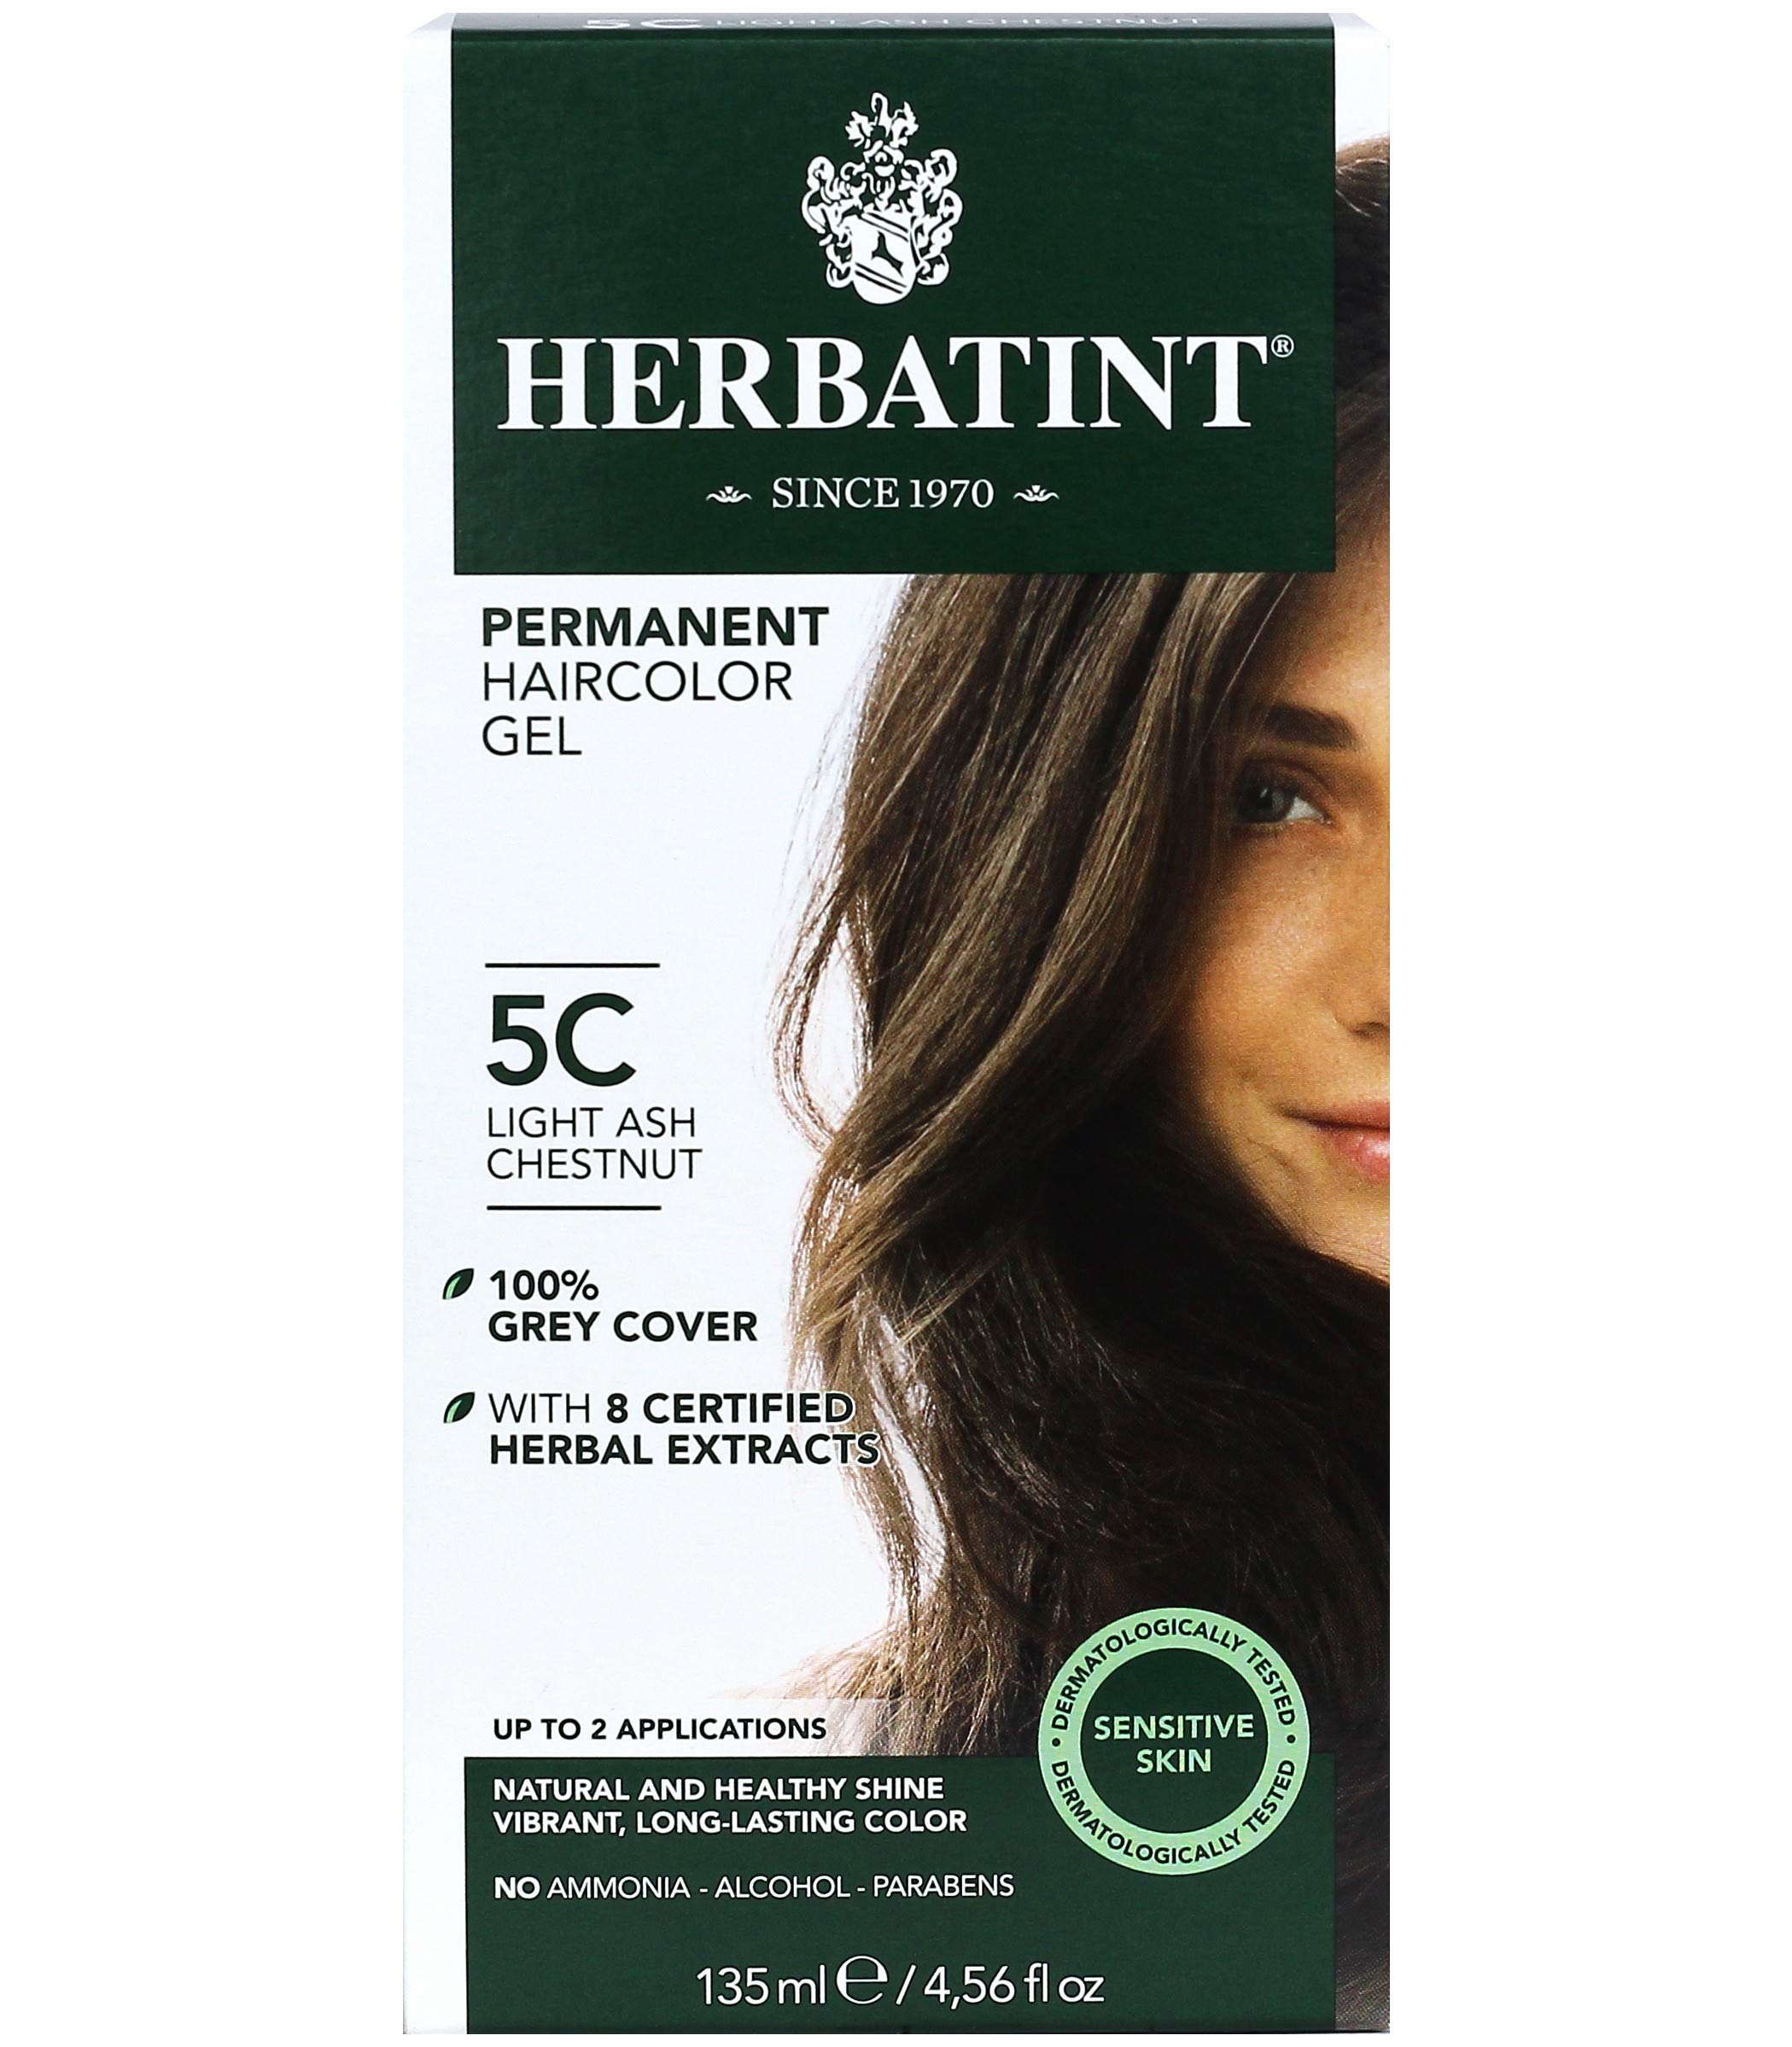 Herbatint Permanent Haircolor Gel, 5C Light Ash Chestnut, Alcohol Free, Vegan, 100% Grey Coverage - 4.56 oz